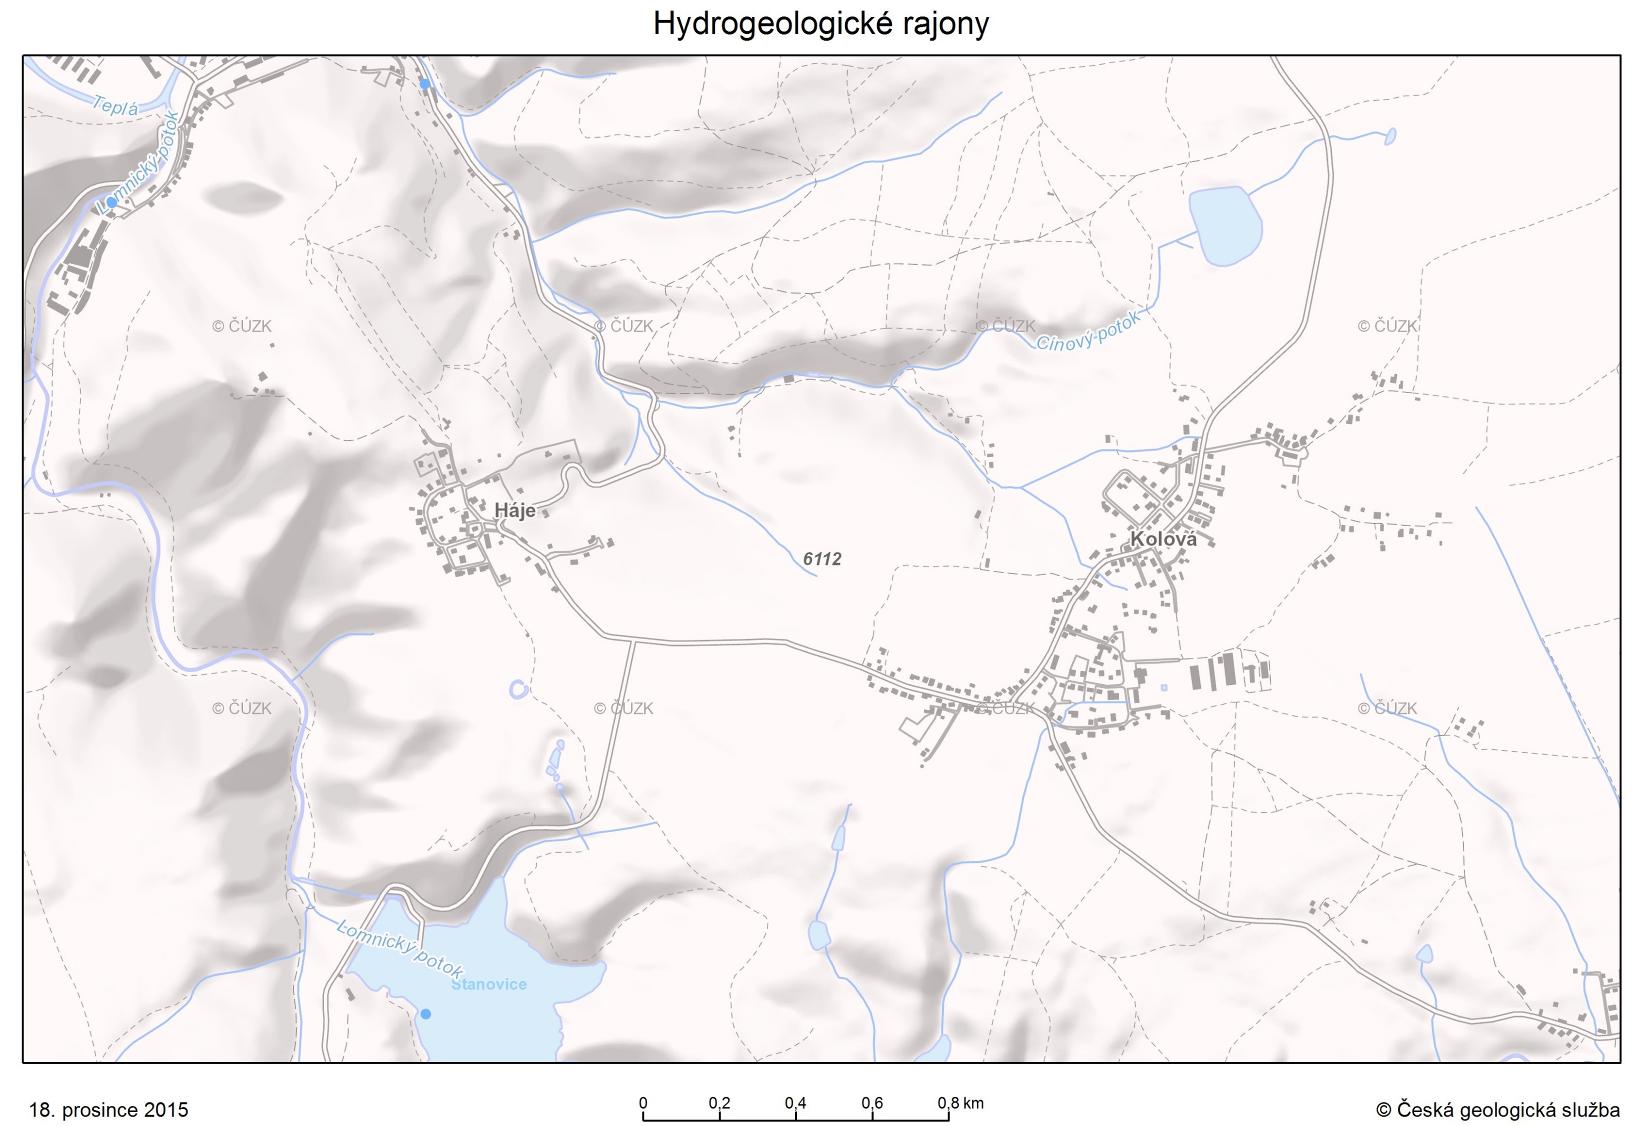 Hydrogeologický rajon: 6112 Název: Krystalinikum Slavkovského lesa Popis: v horninách krystalinika,